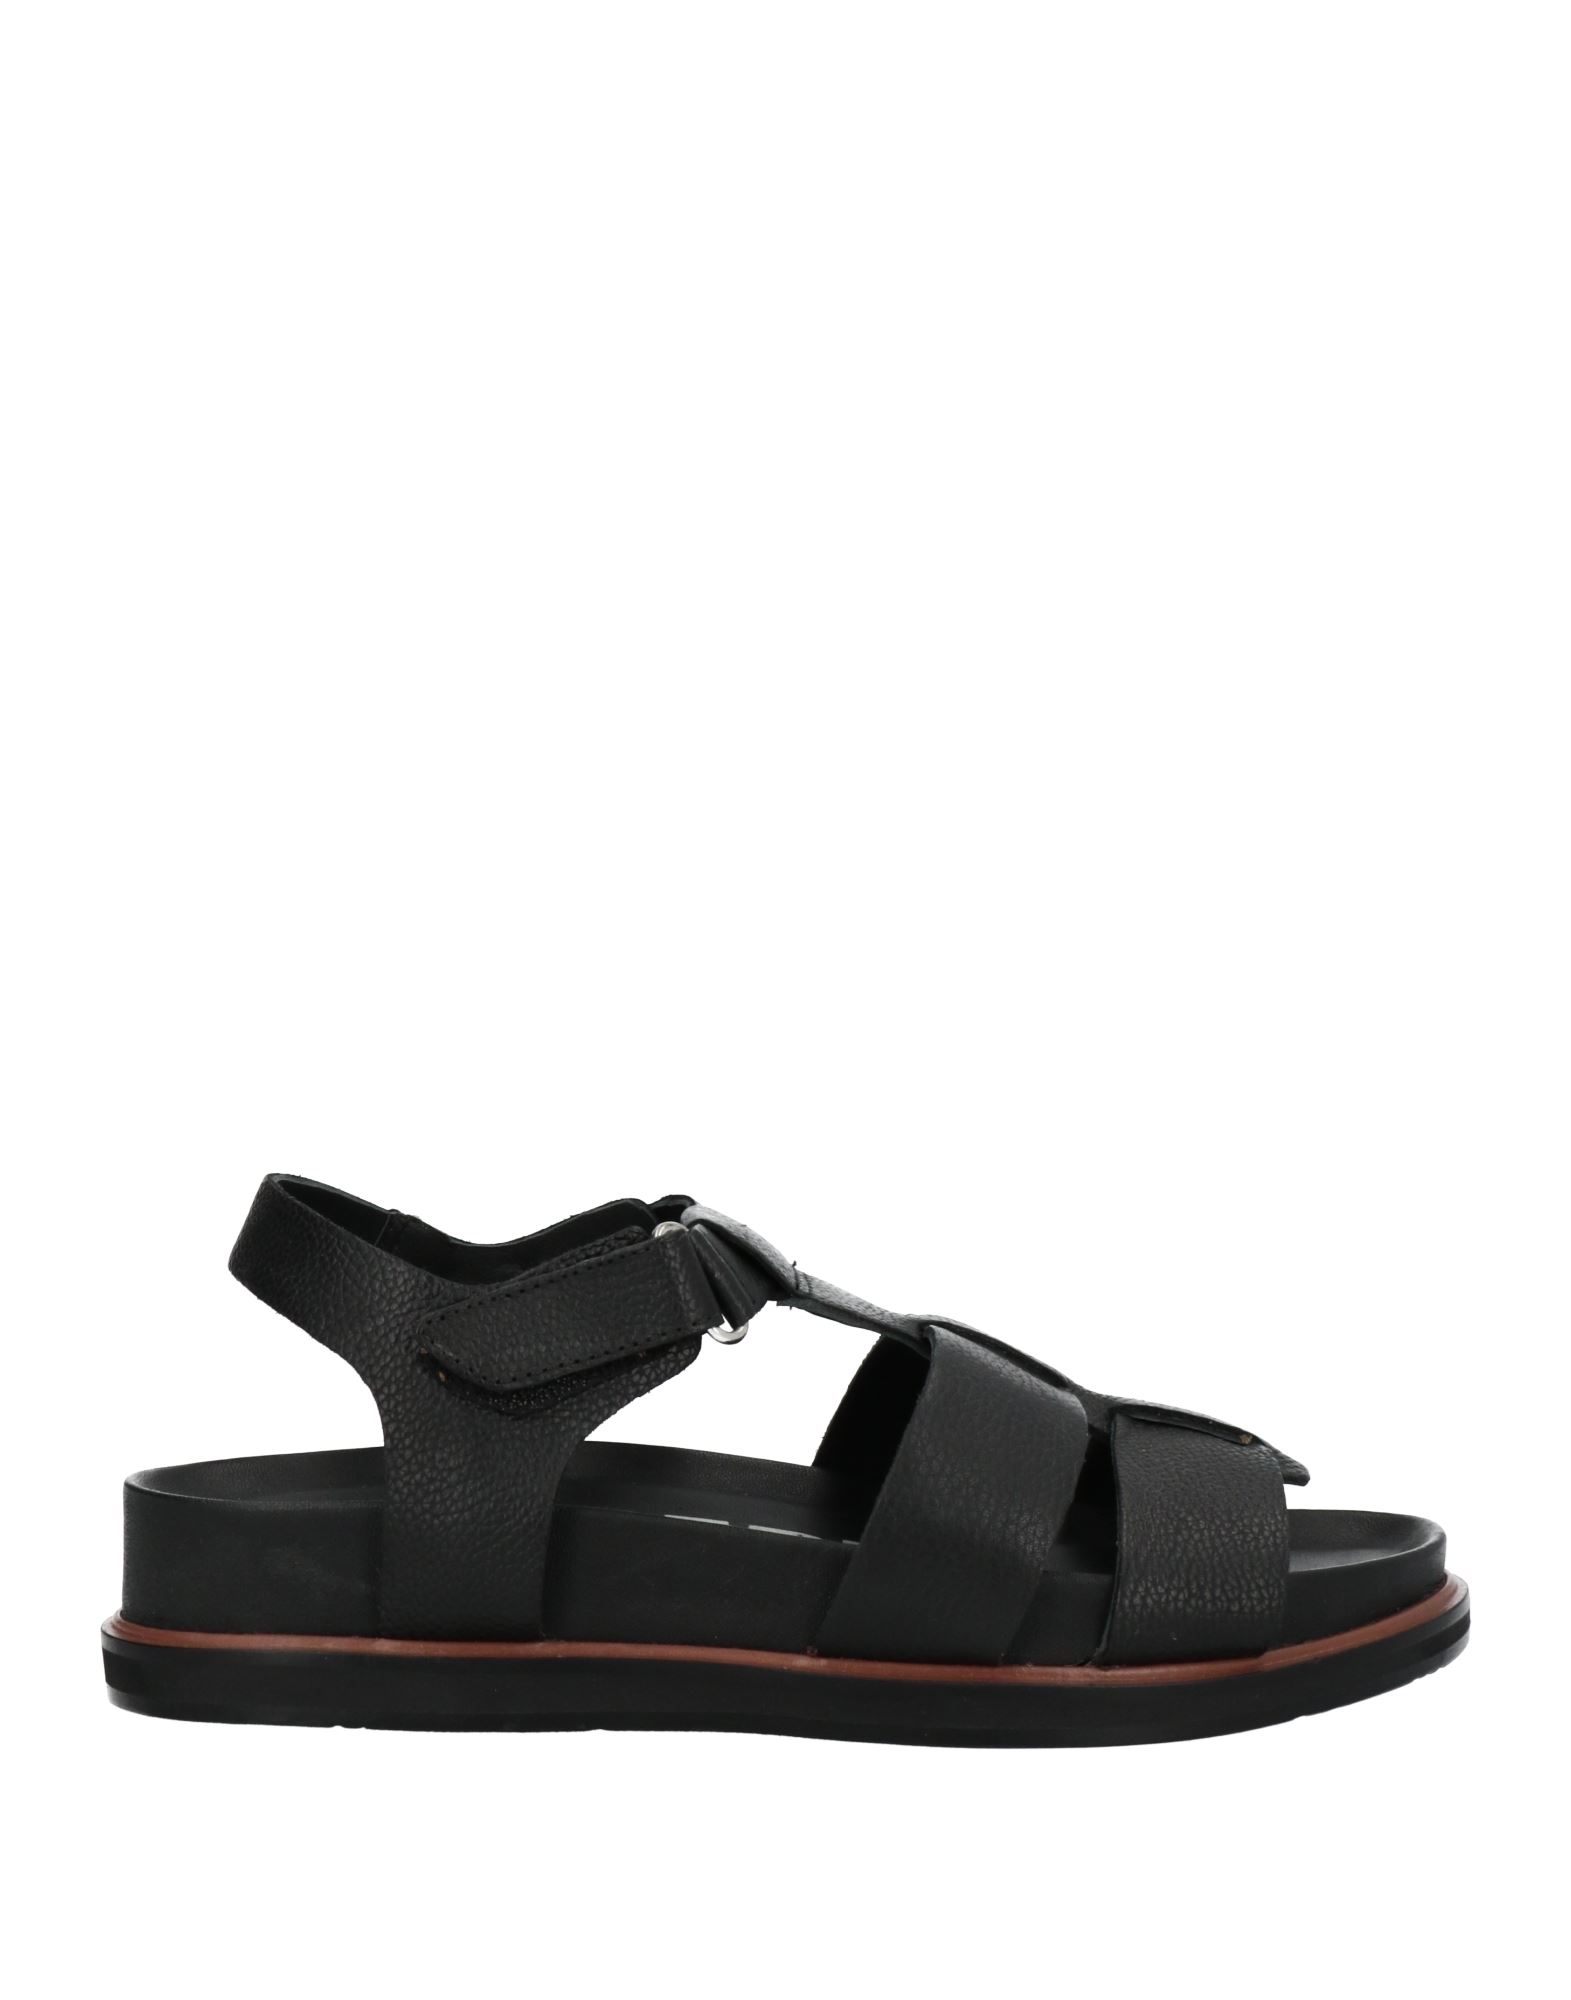 Gioseppo Sandals In Black